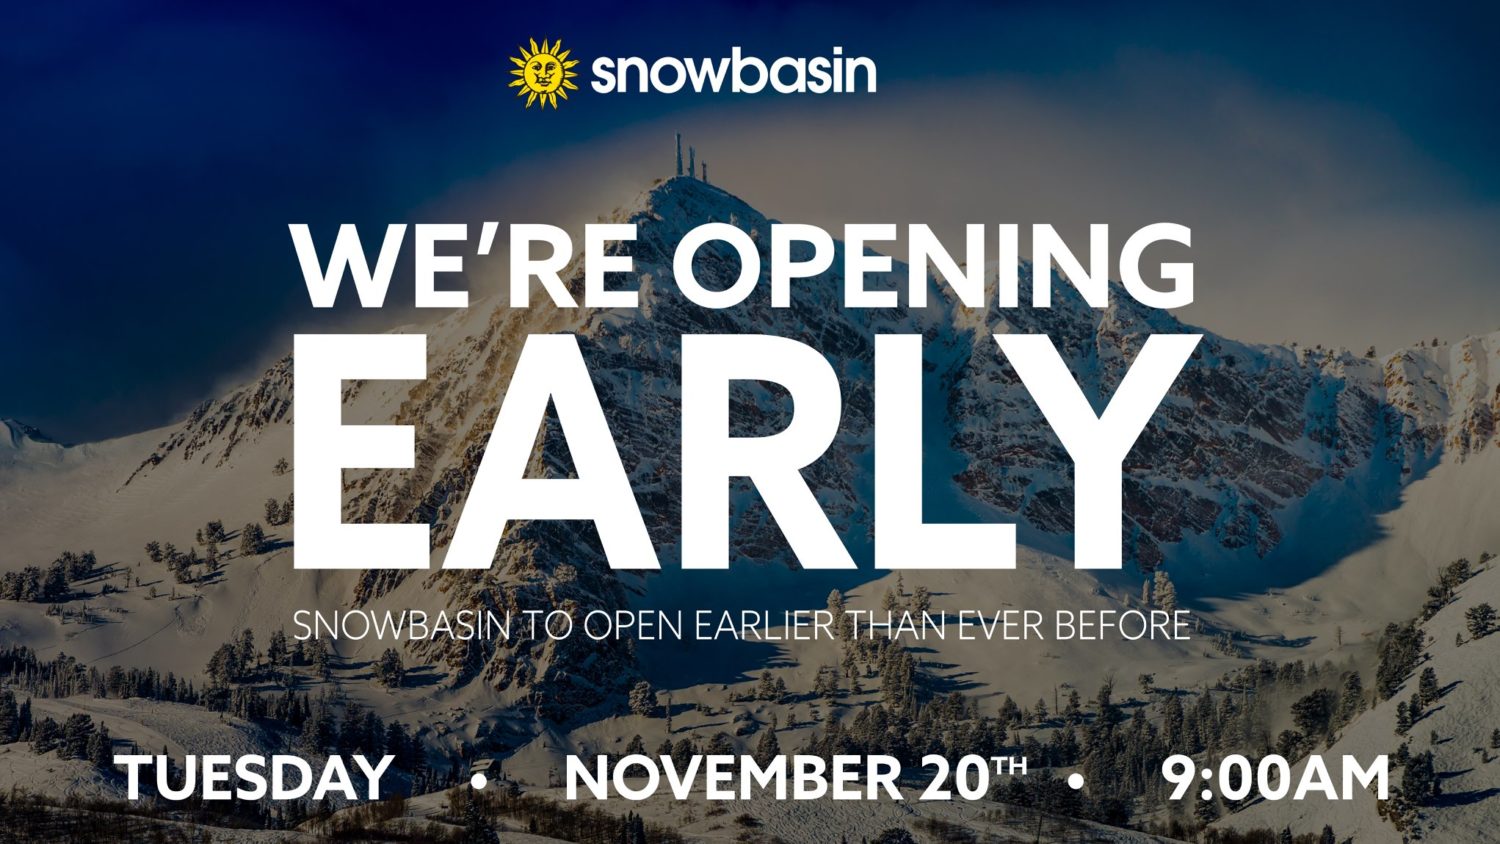 snowbasin, Utah, opening early